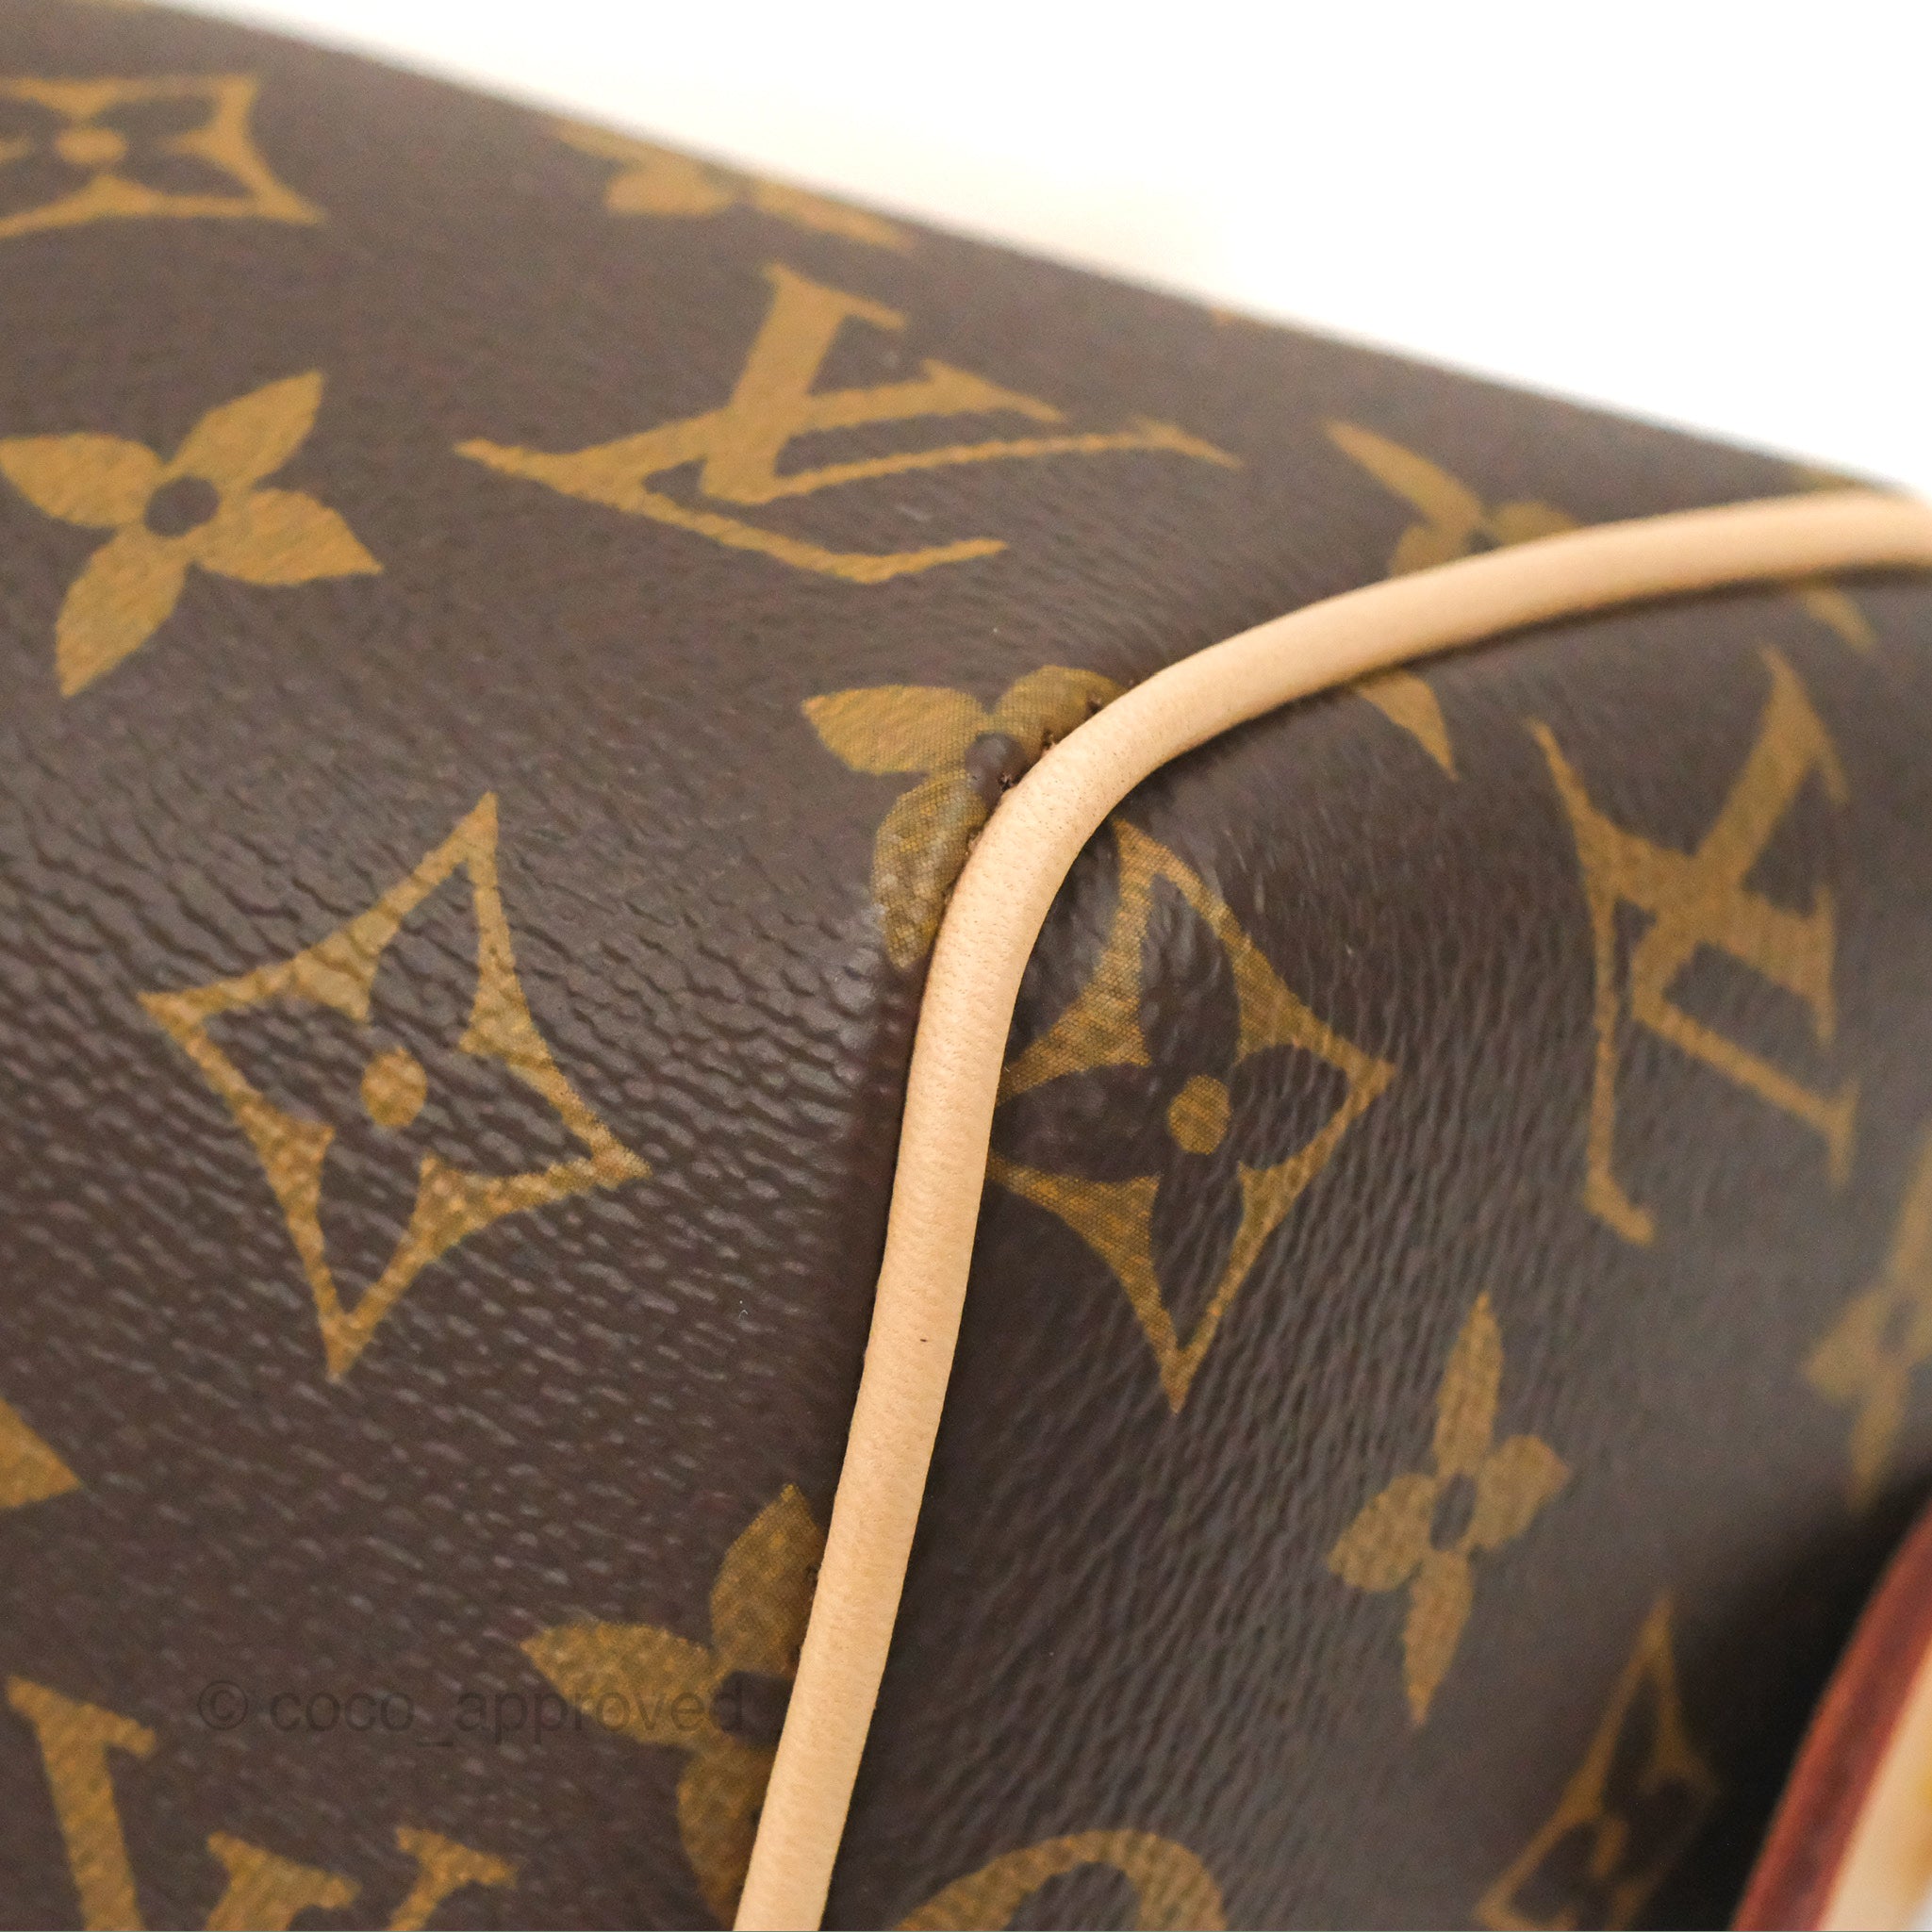 Louis Vuitton Speedy Bandoulière 20 Monogram – Coco Approved Studio